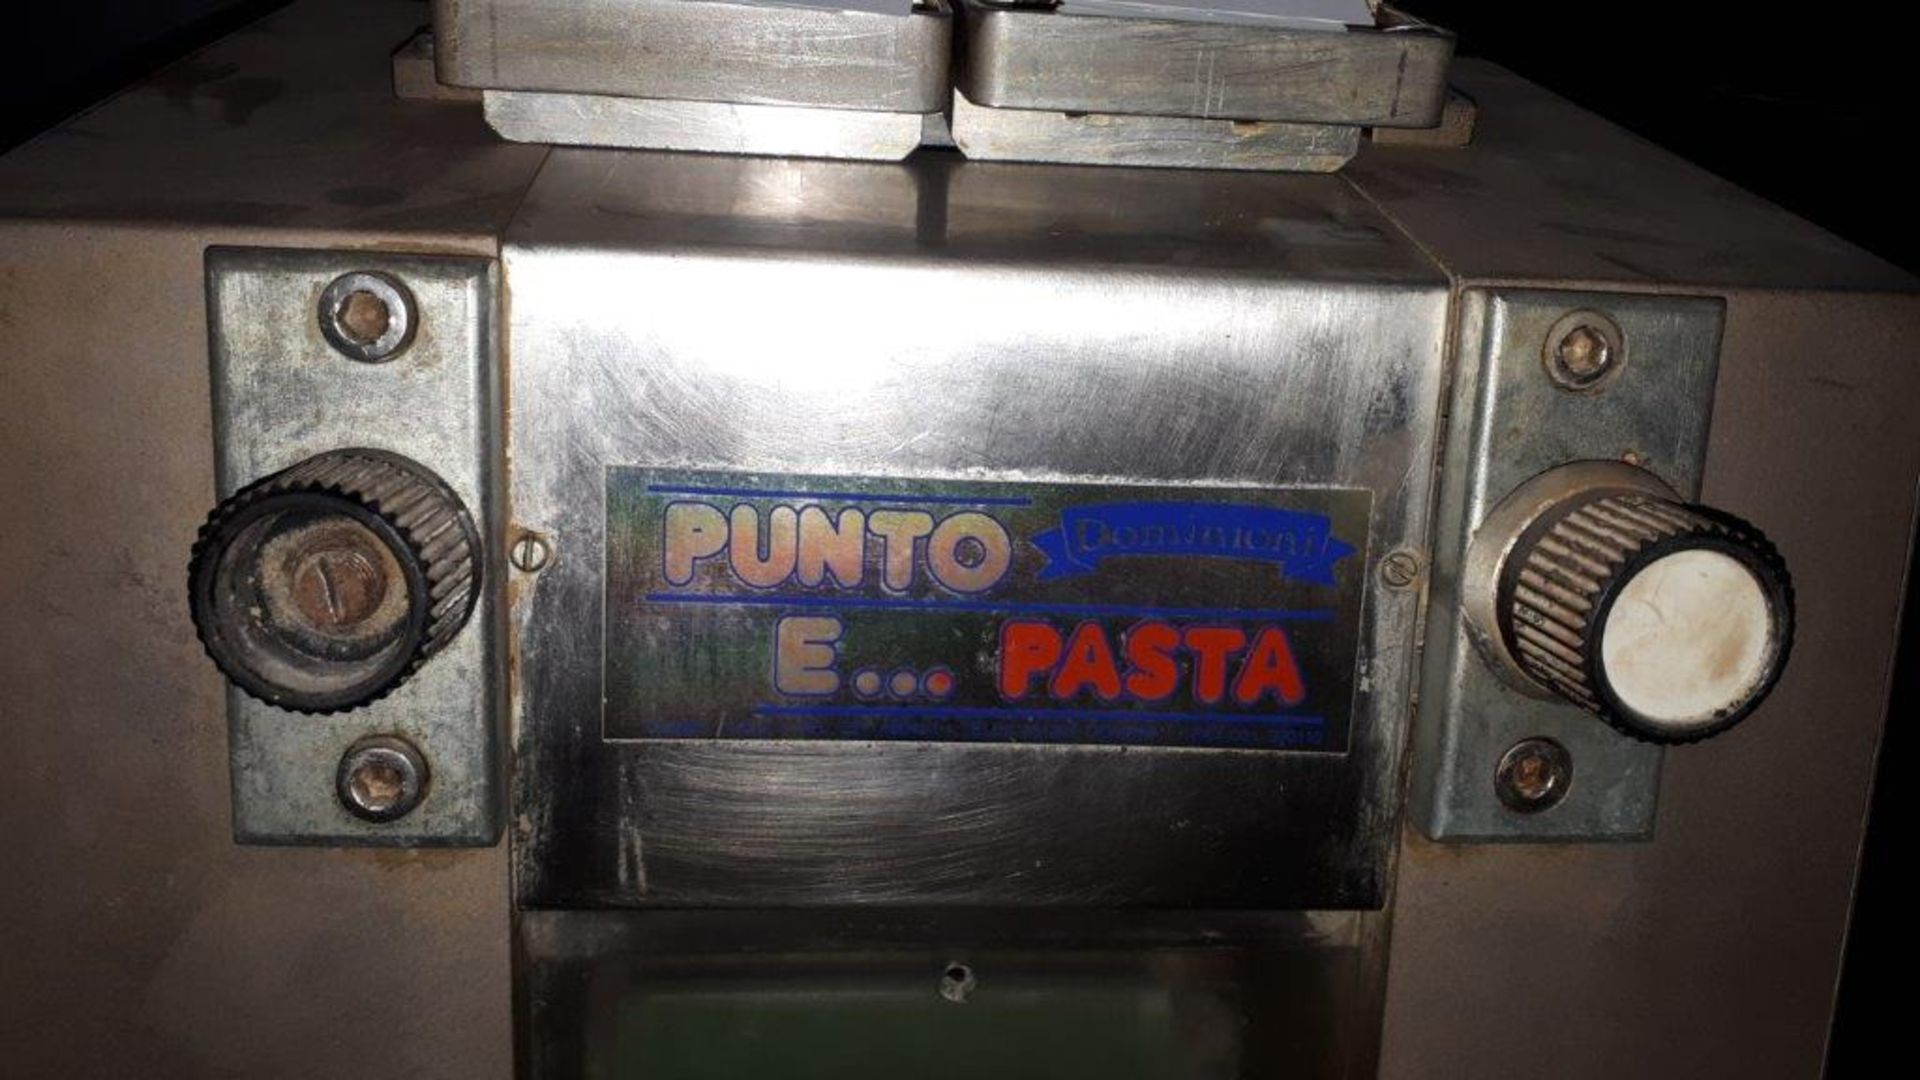 Dominioni S/S Commercial fresh pasta machine, model: TQ160 - Image 4 of 5